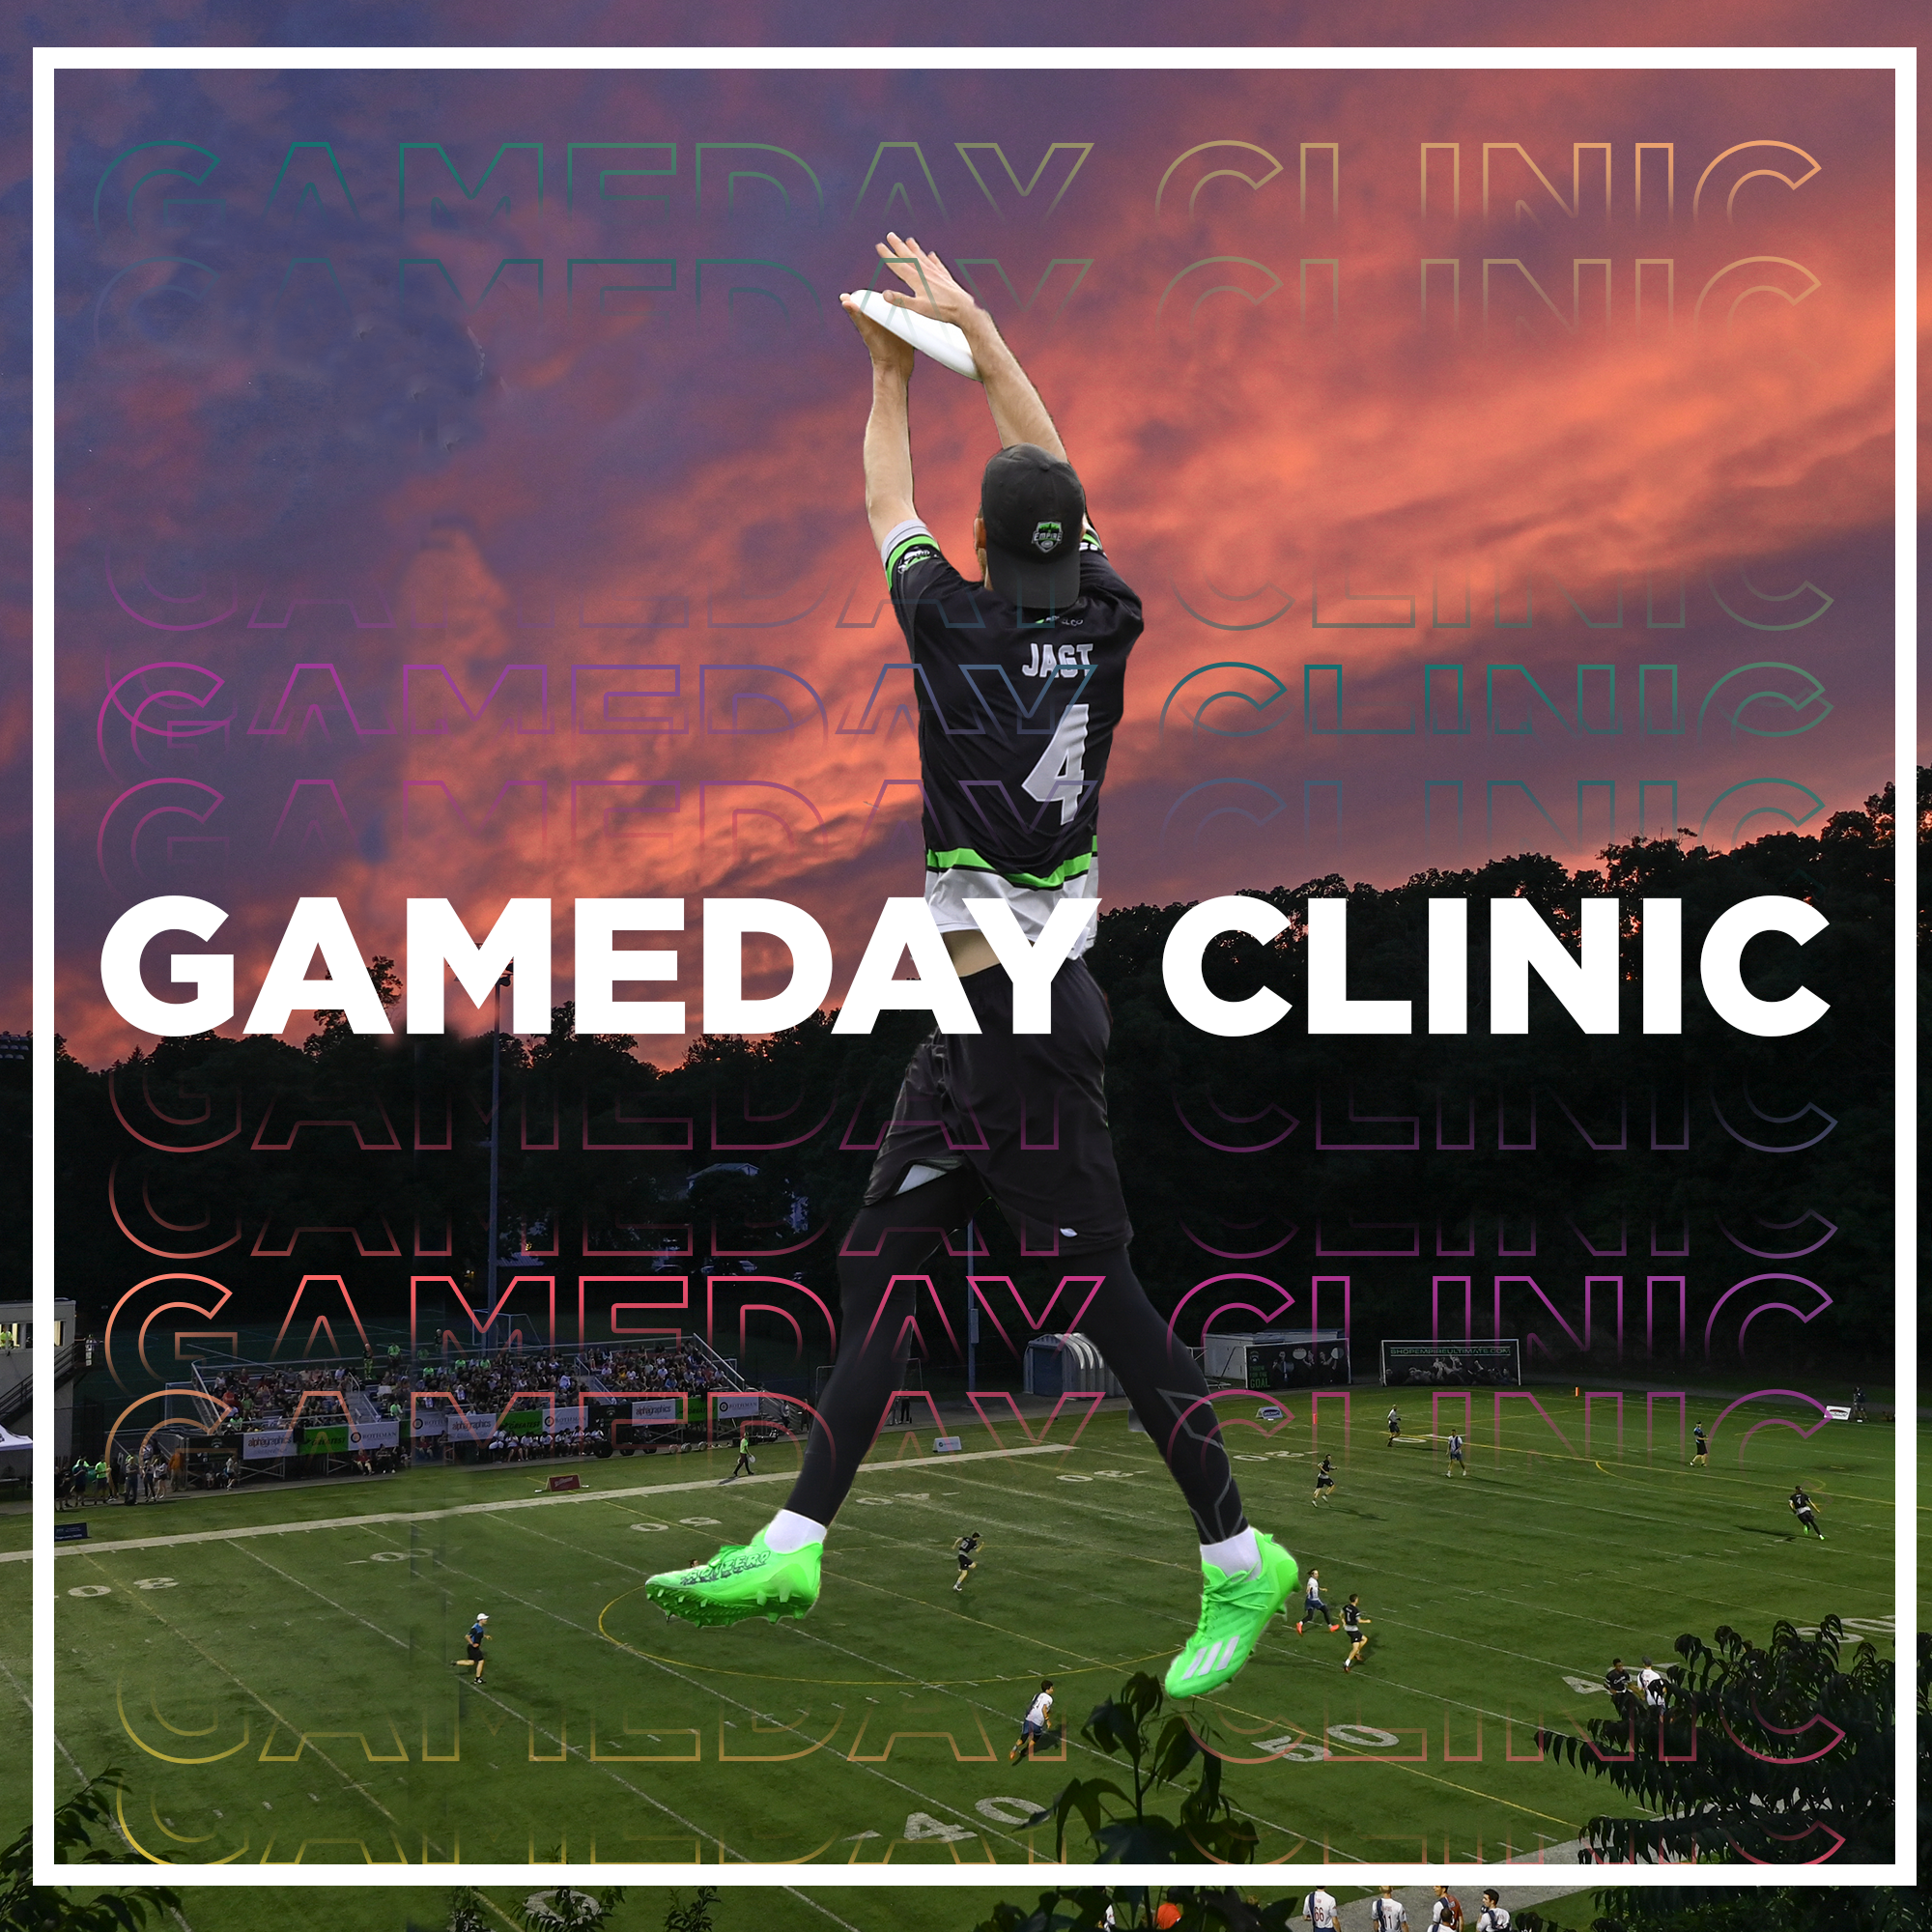 Summer Gameday clinics